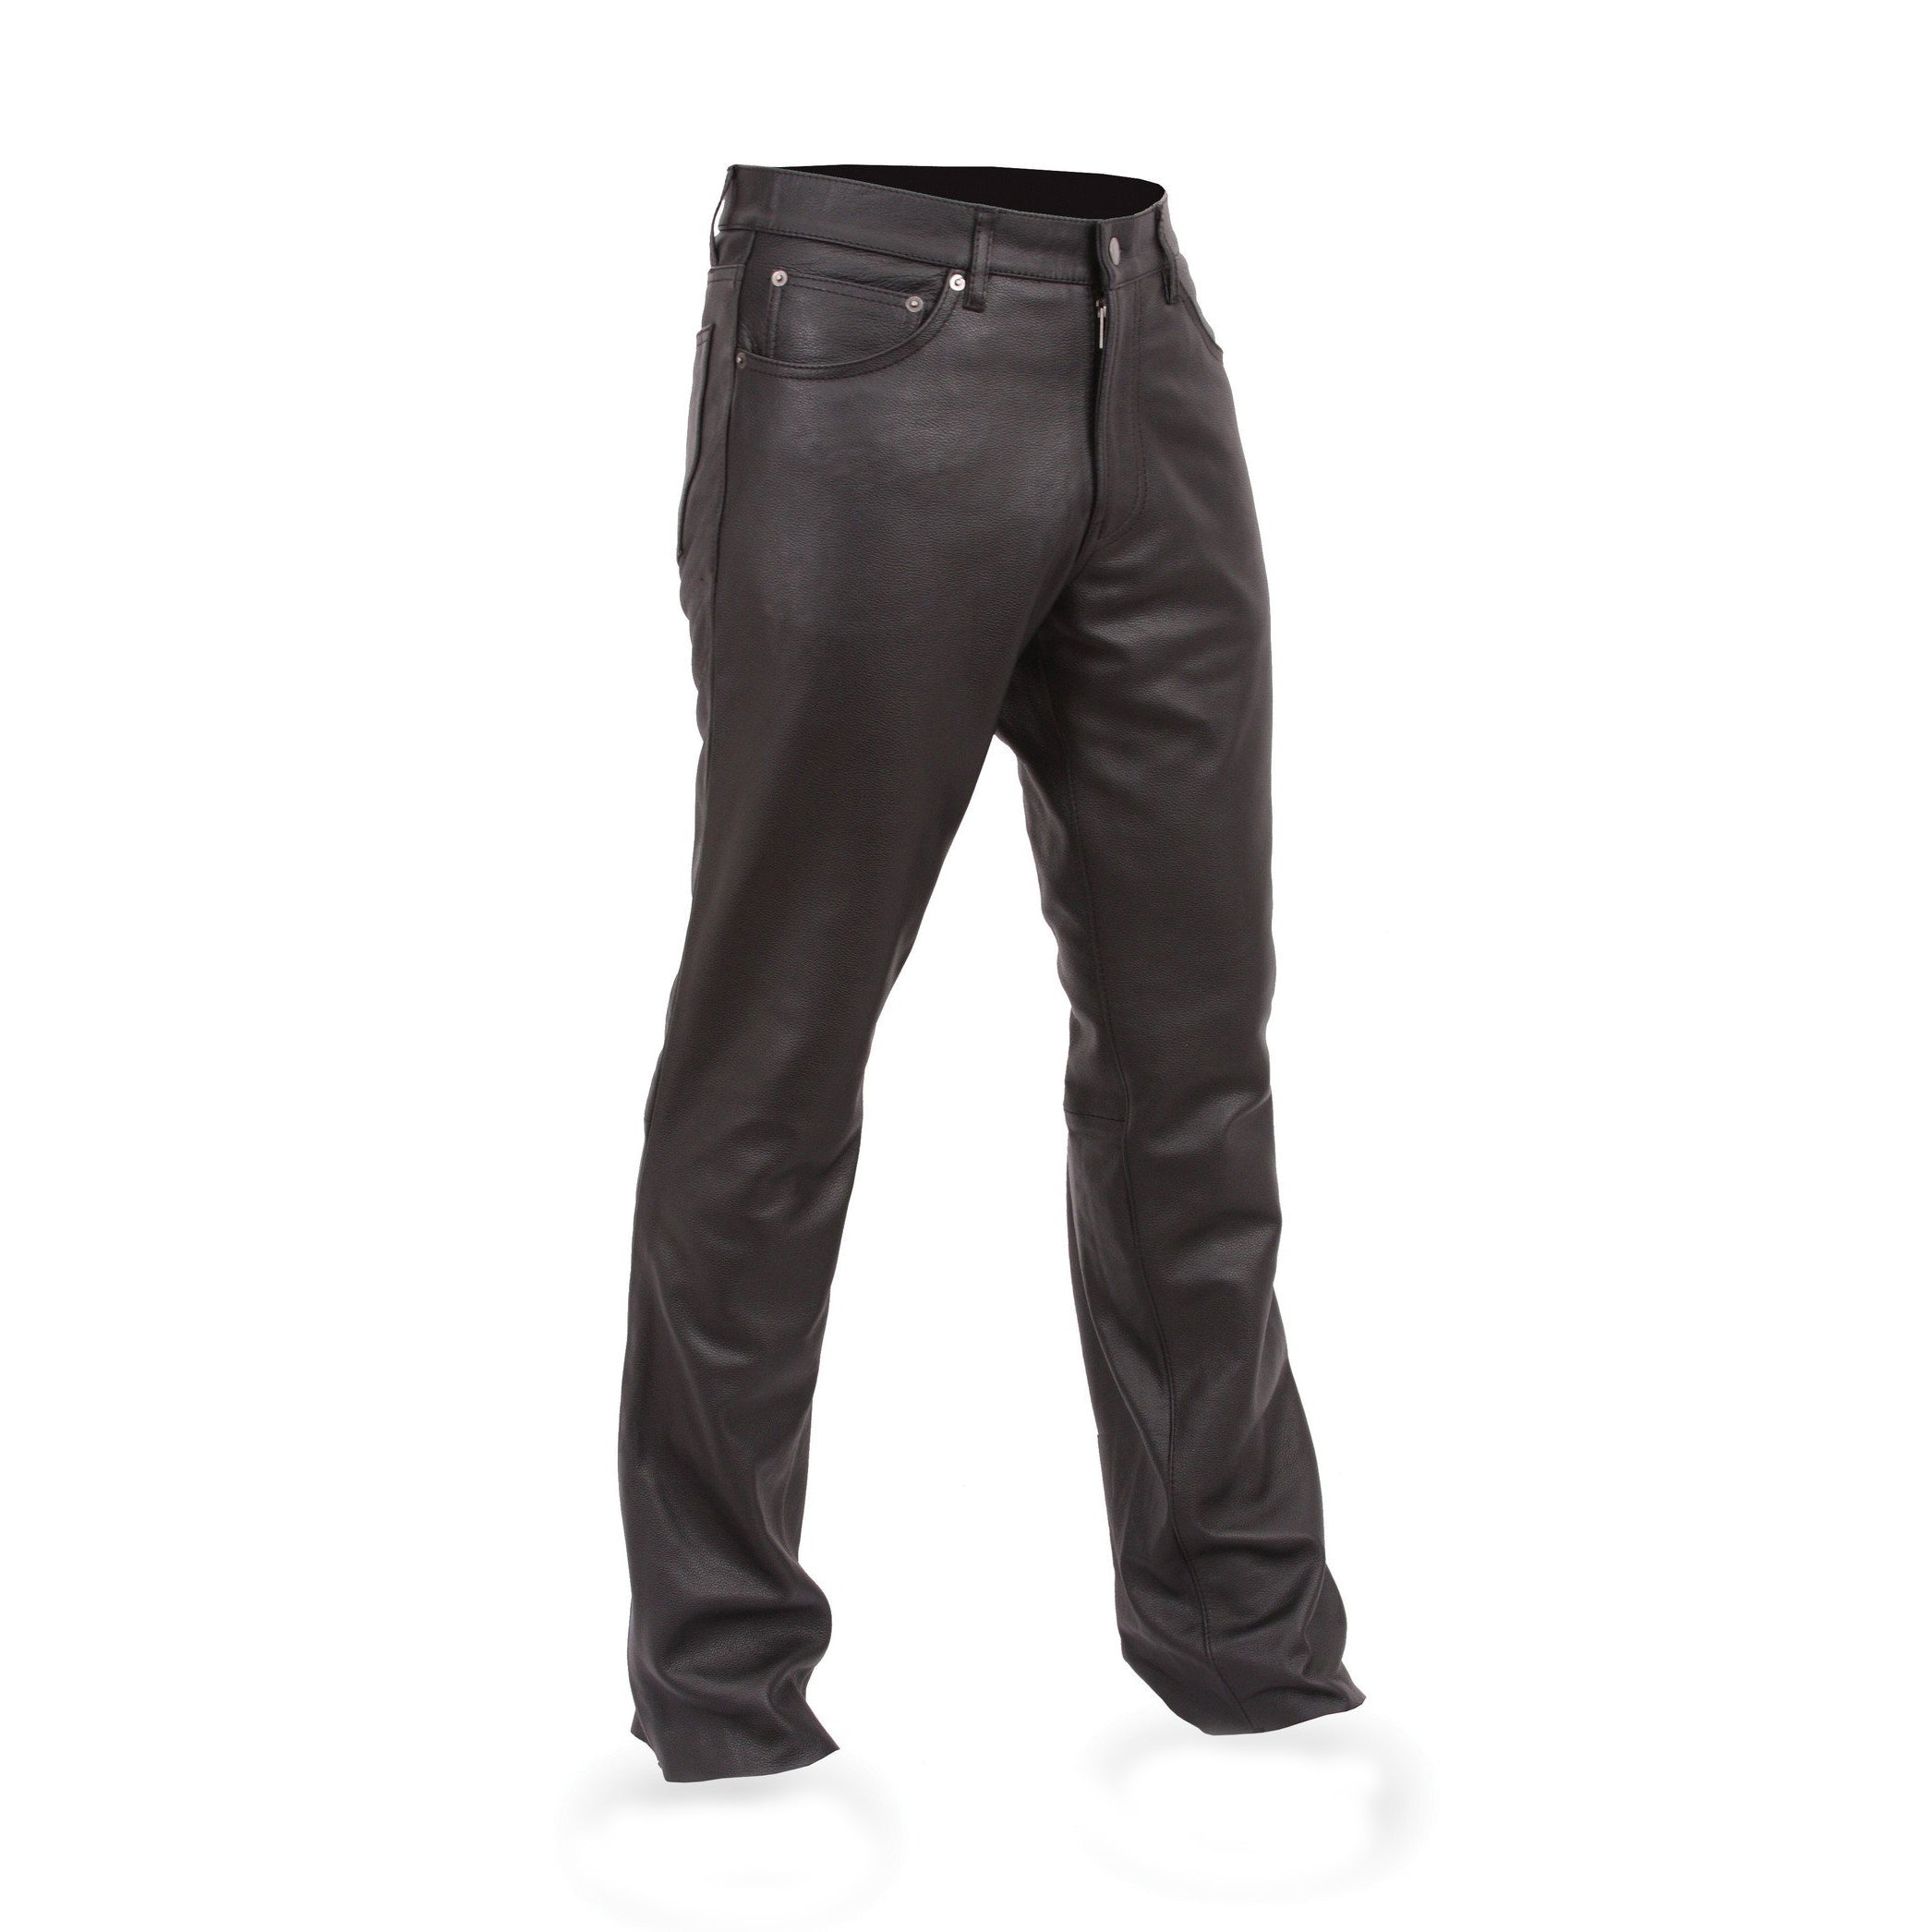 The Eternal Demand of Men's Leather Pants: A Versatile Wardrobe Essential |  by Emily Cooper | Medium